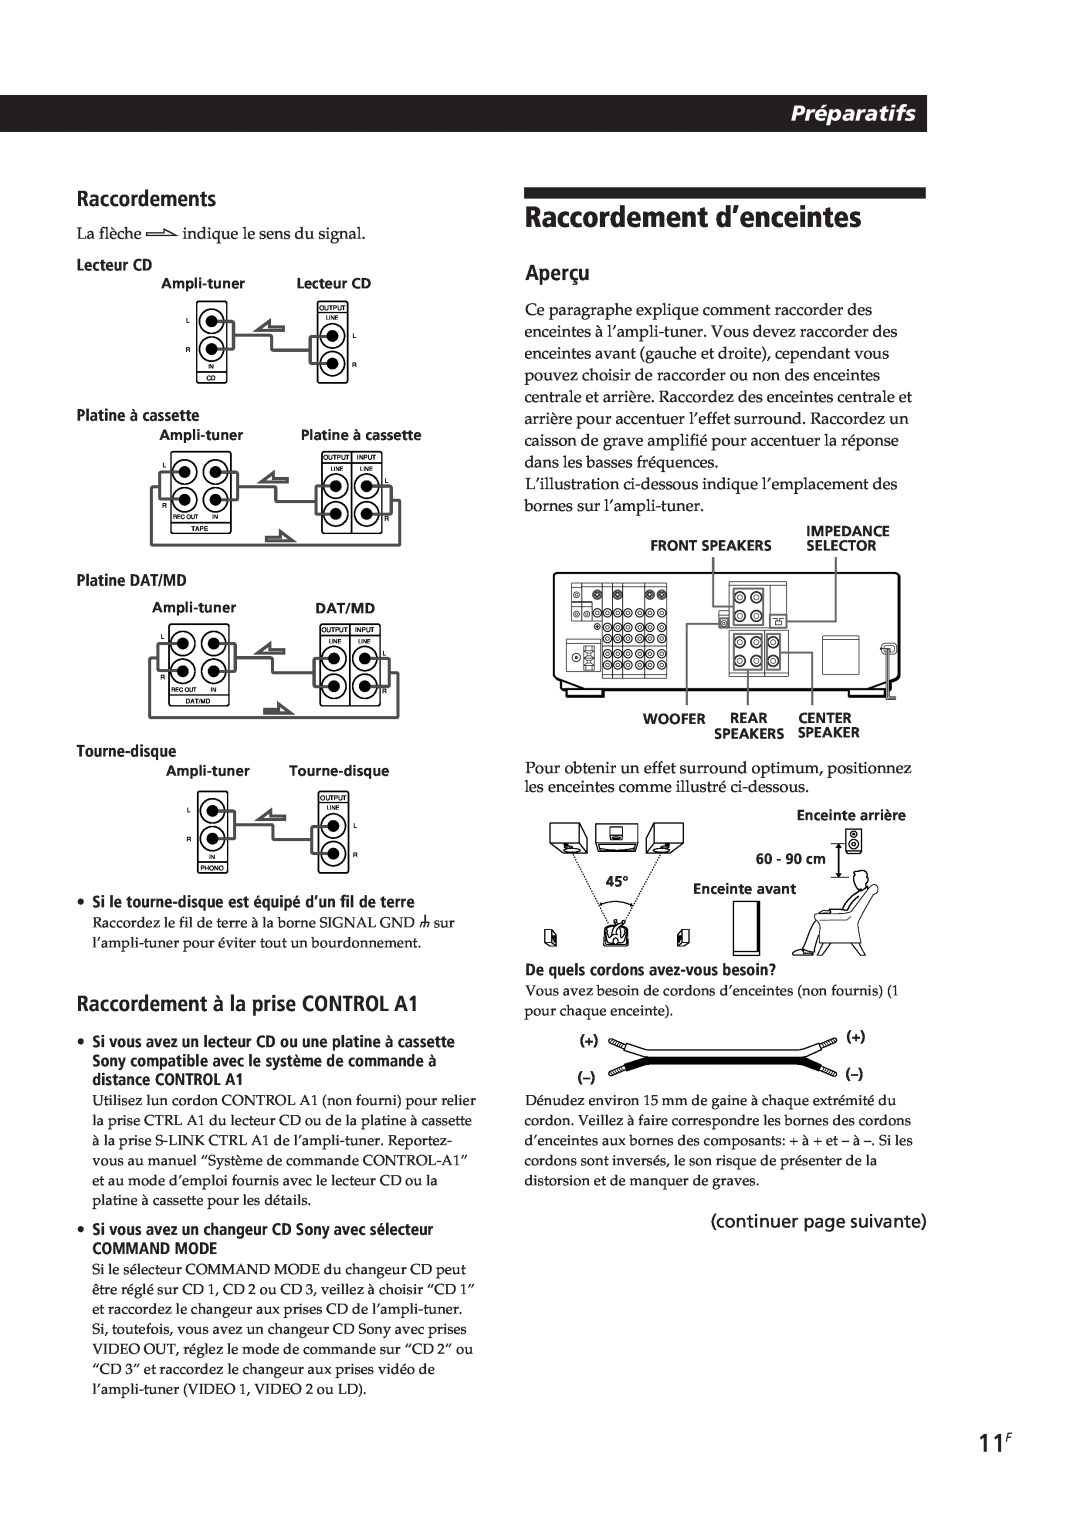 Sony STR-DE805G manual Raccordement d’enceintes, Raccordements, Raccordement à la prise CONTROL A1, Préparatifs, Aperçu 